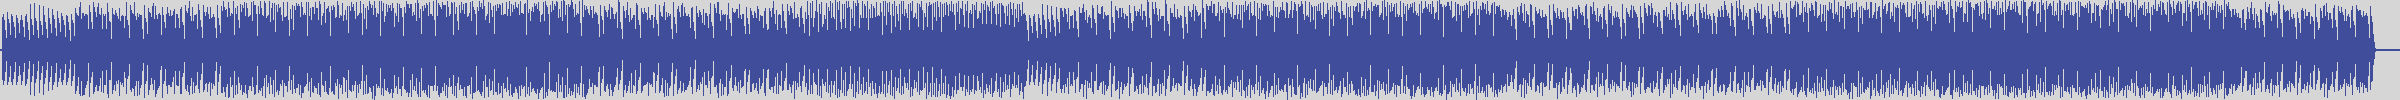 nf_boyz_records [NFY023] Orbitant - Heli On [Atomic Mix] audio wave form